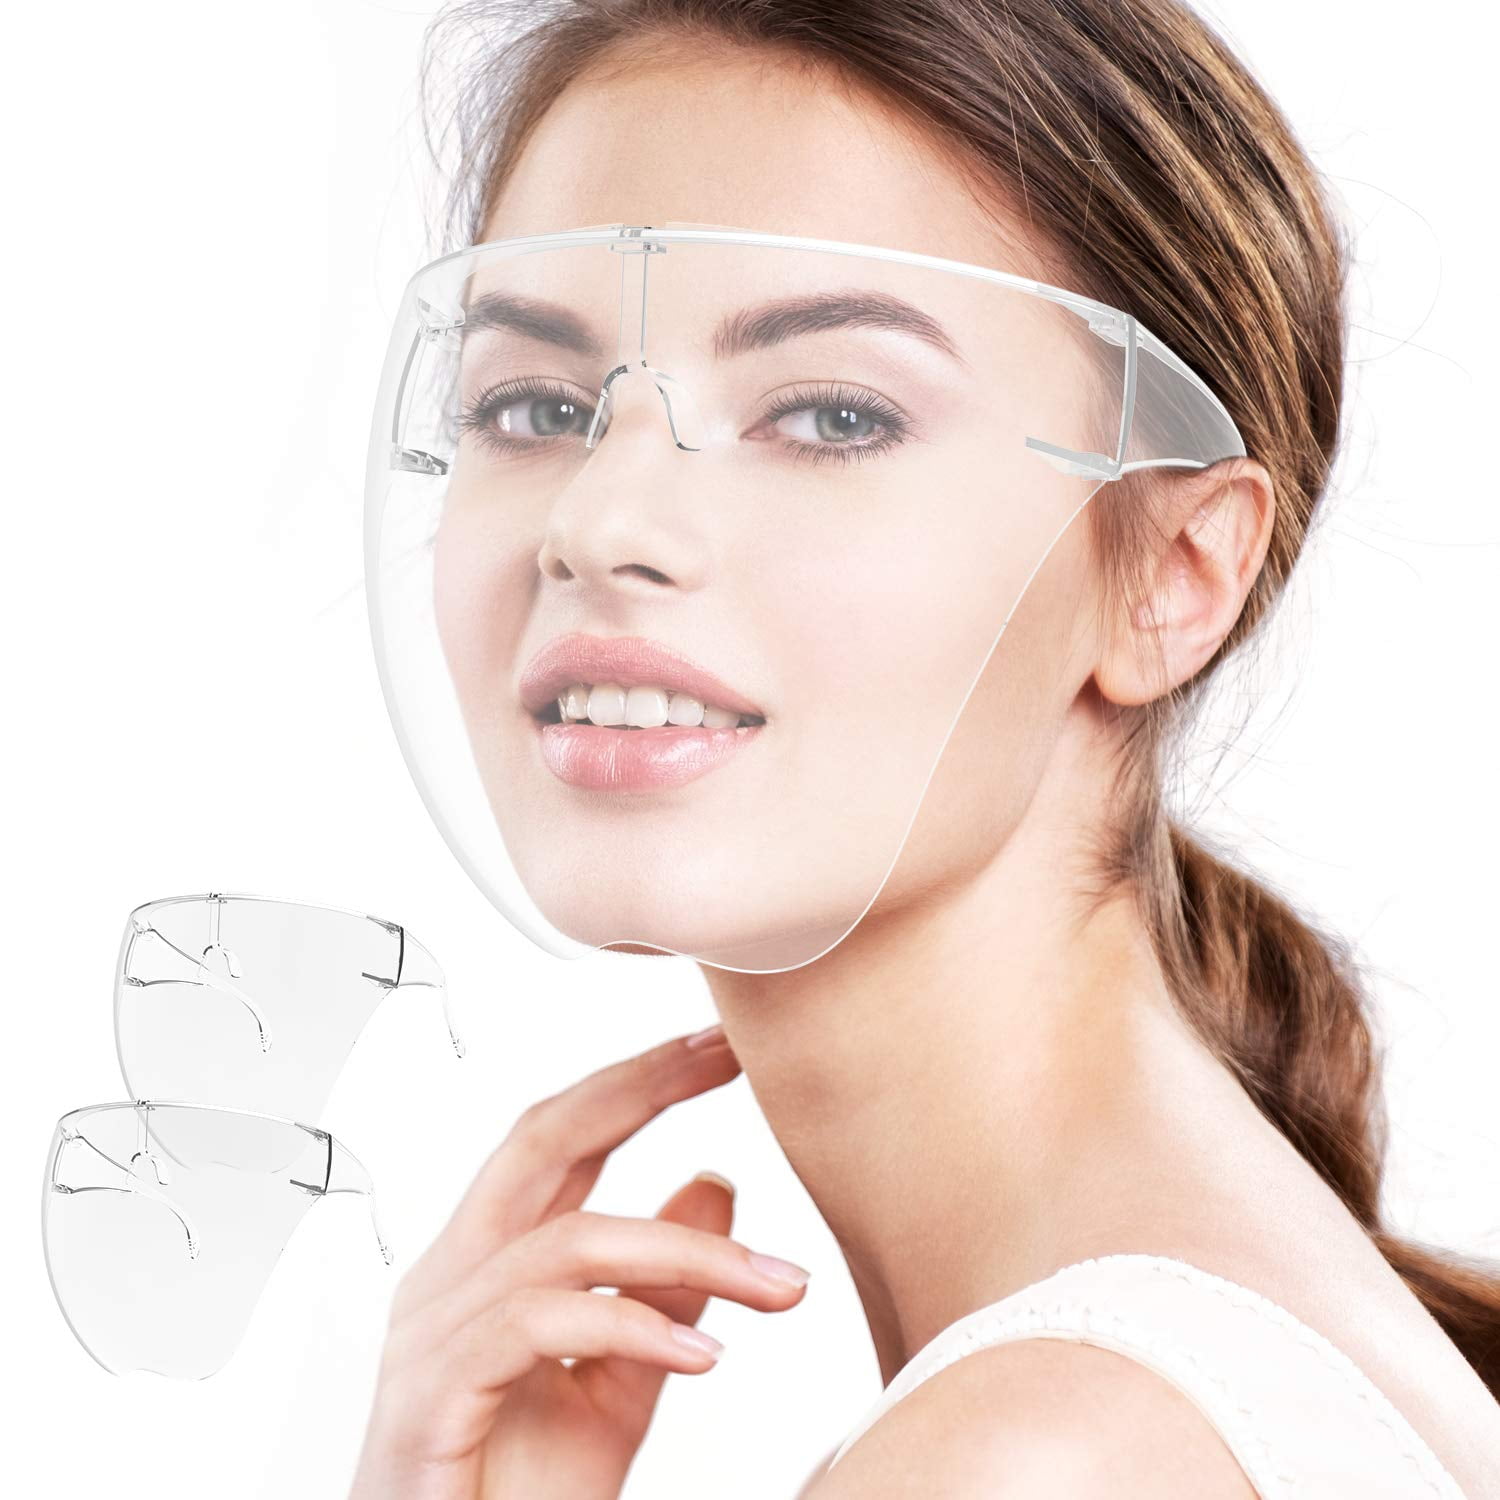 Reusable Clear Mask Plastic Face Cover Protective Shield Visor Glasses Eyewear 